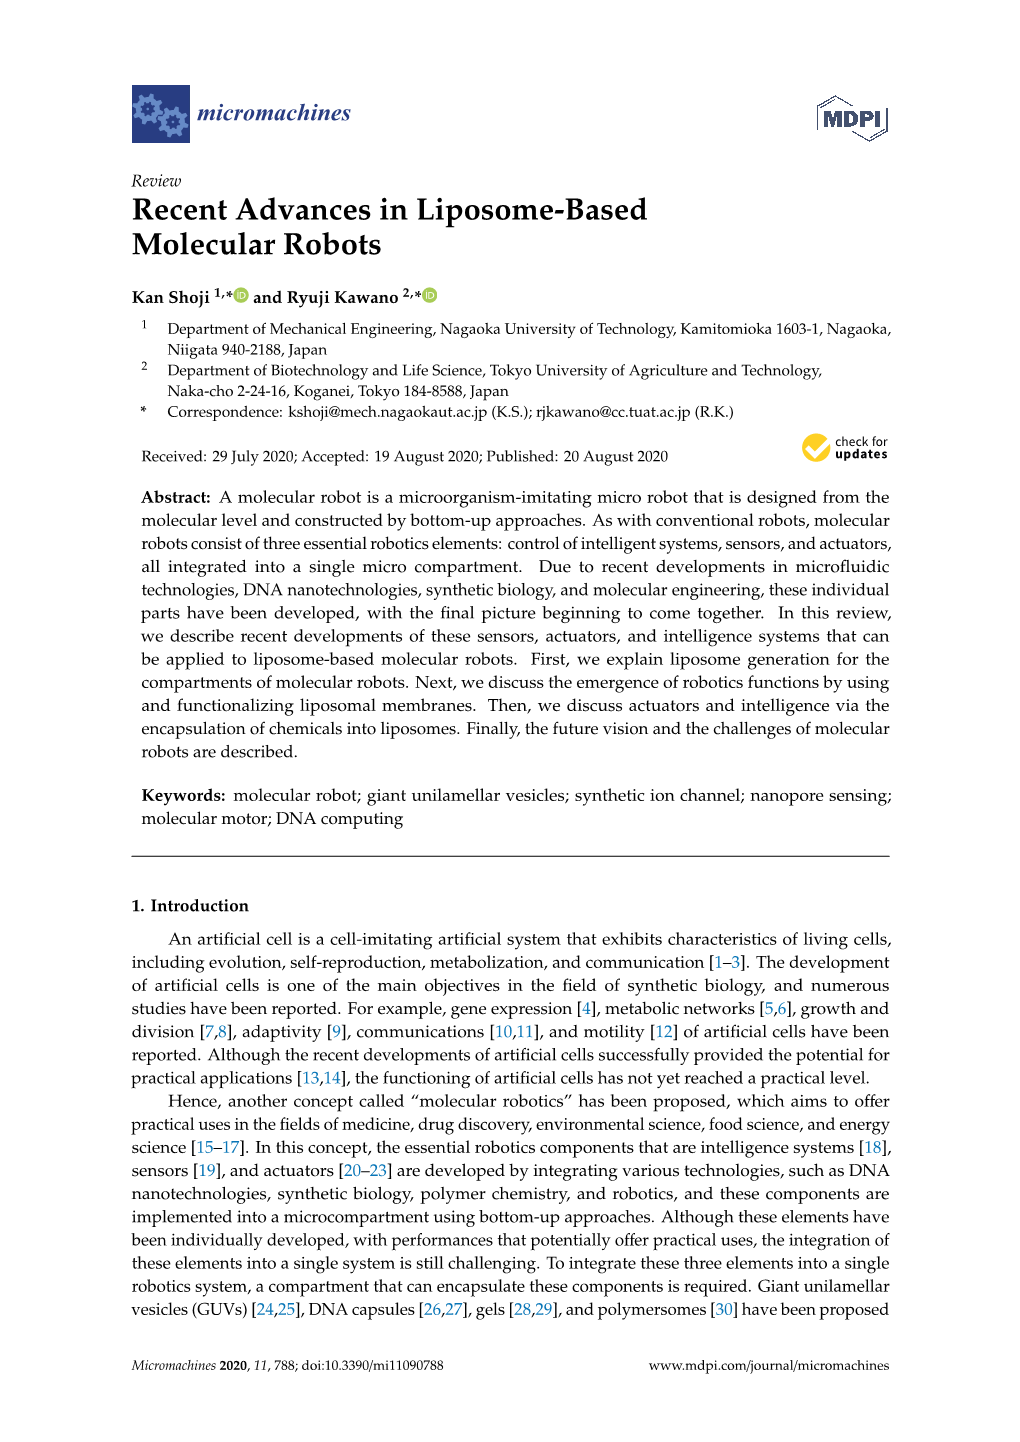 Recent Advances in Liposome-Based Molecular Robots